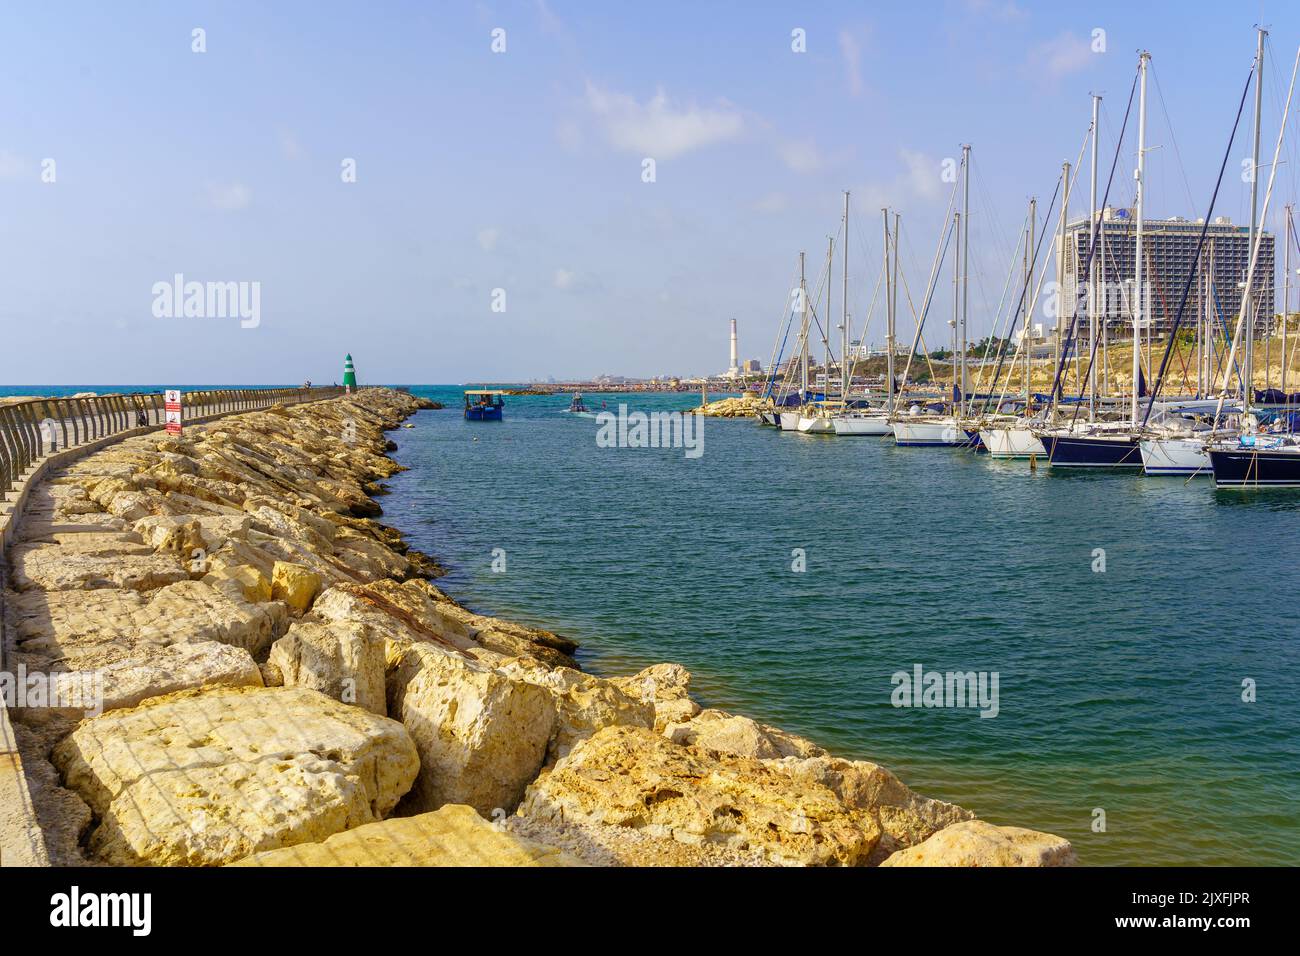 Tel-Aviv, Israel - June 17, 2022: View of the Marina, with various boats, in Tel-Aviv, Israel Stock Photo